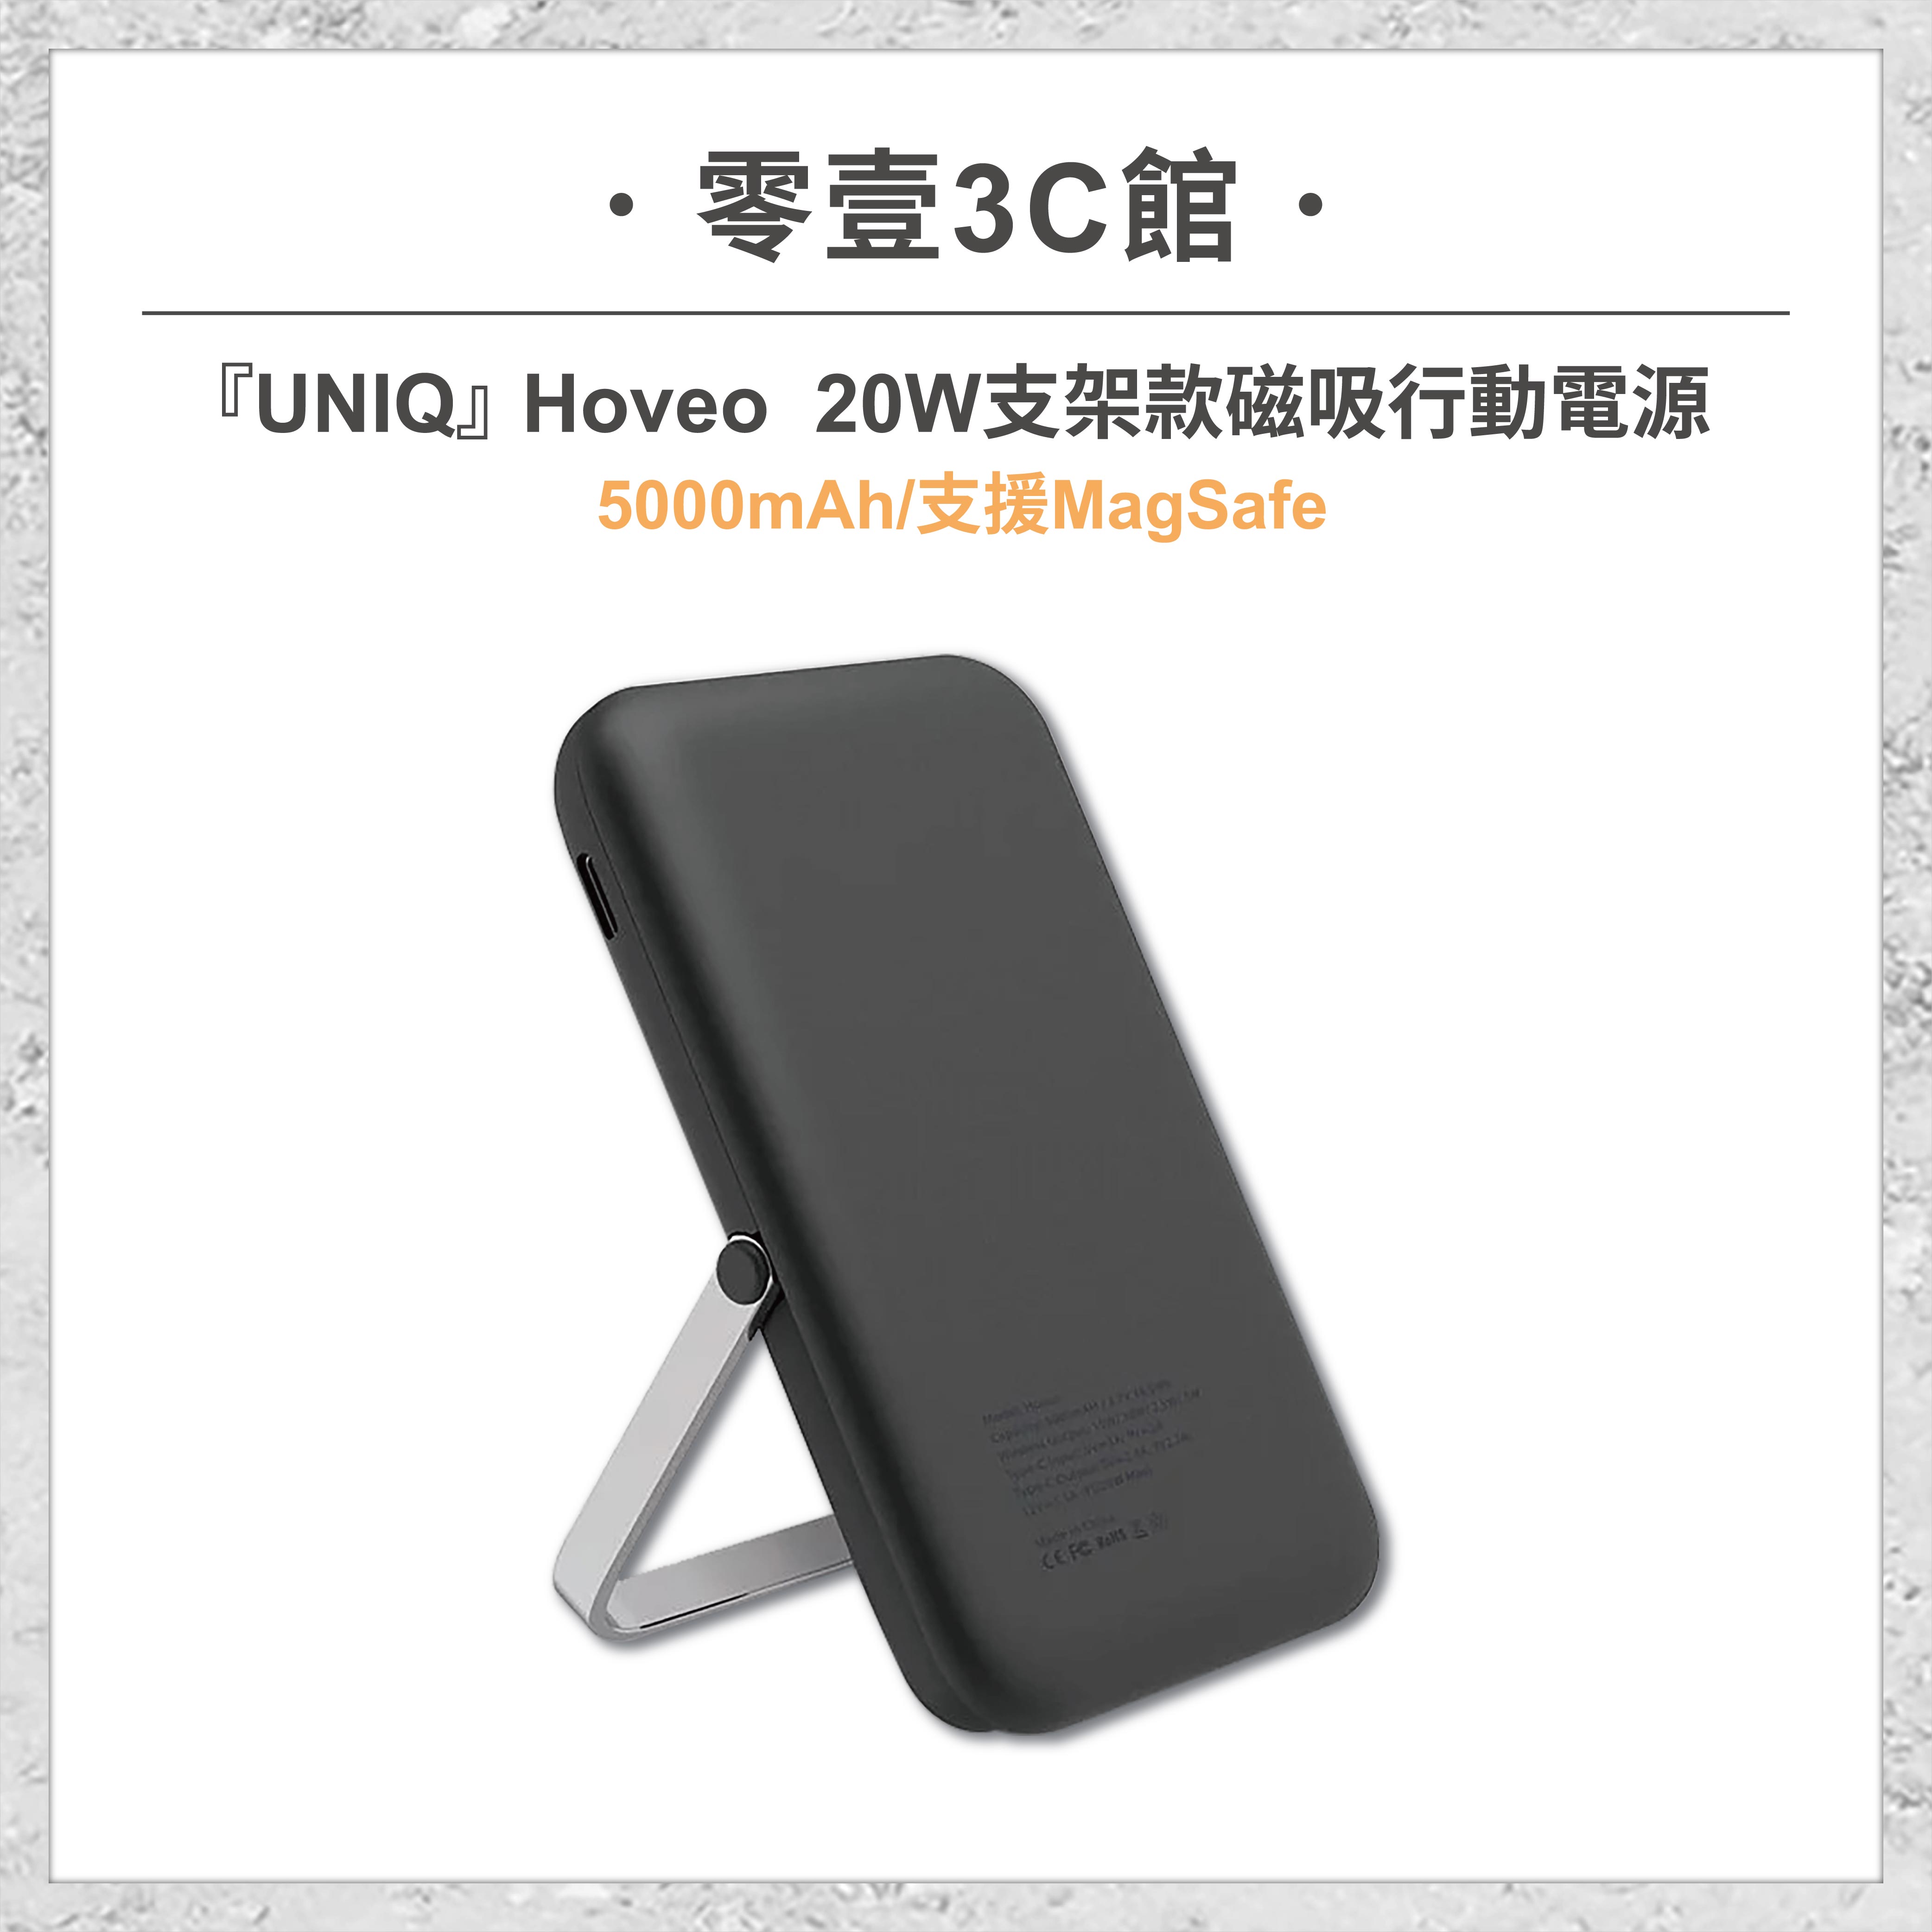 『UNIQ』Hoveo 5000mAh 20W支架款磁吸行動電源(支援MagSafe) 無線快充 磁吸充電